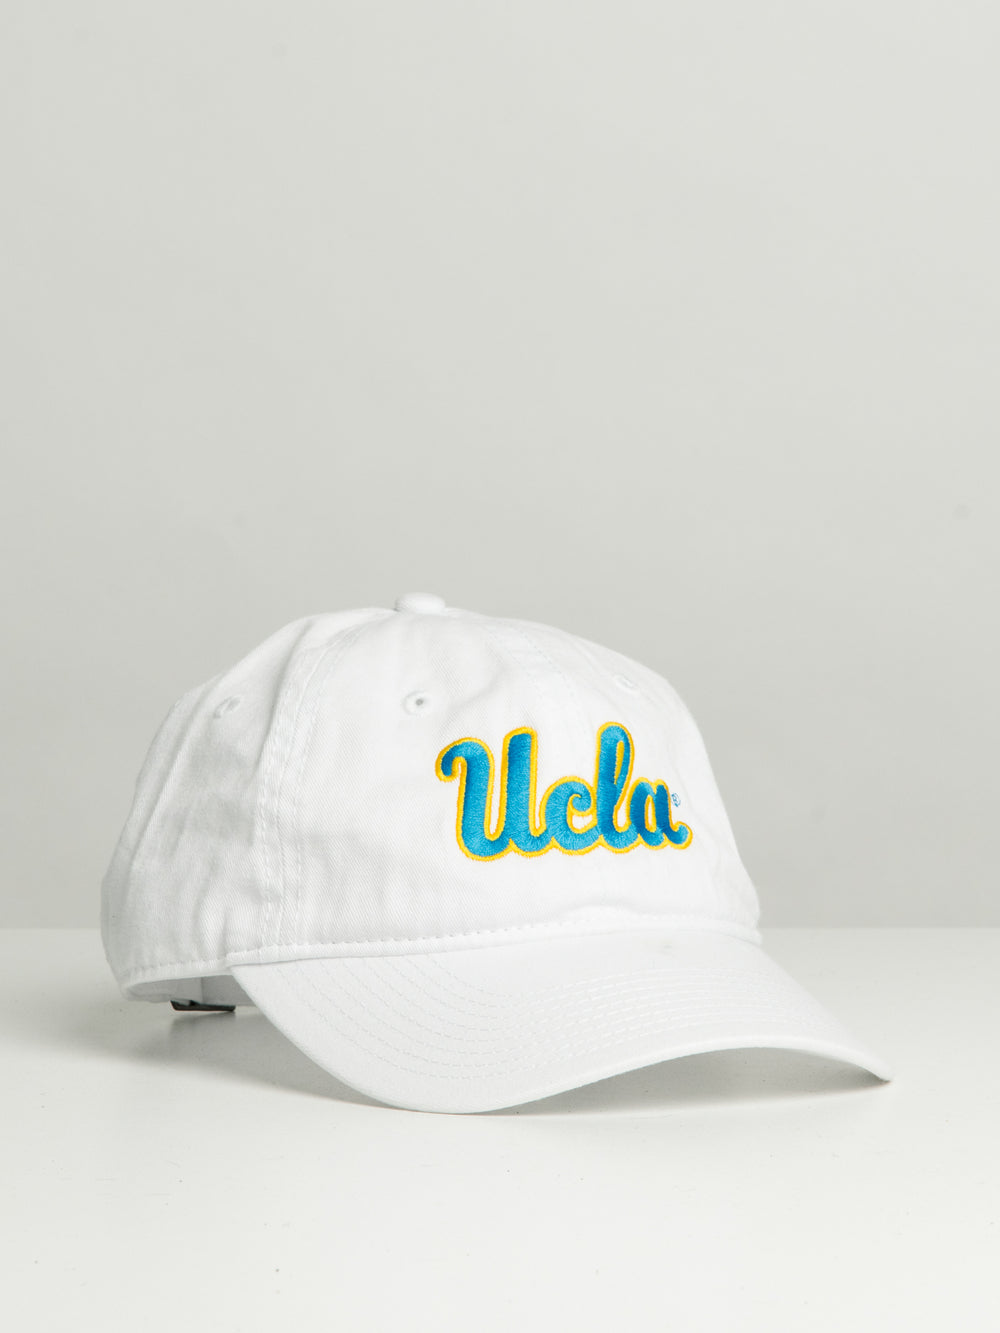 CHAMPION UCLA ADJUSTABLE TWILL HAT - CLEARANCE